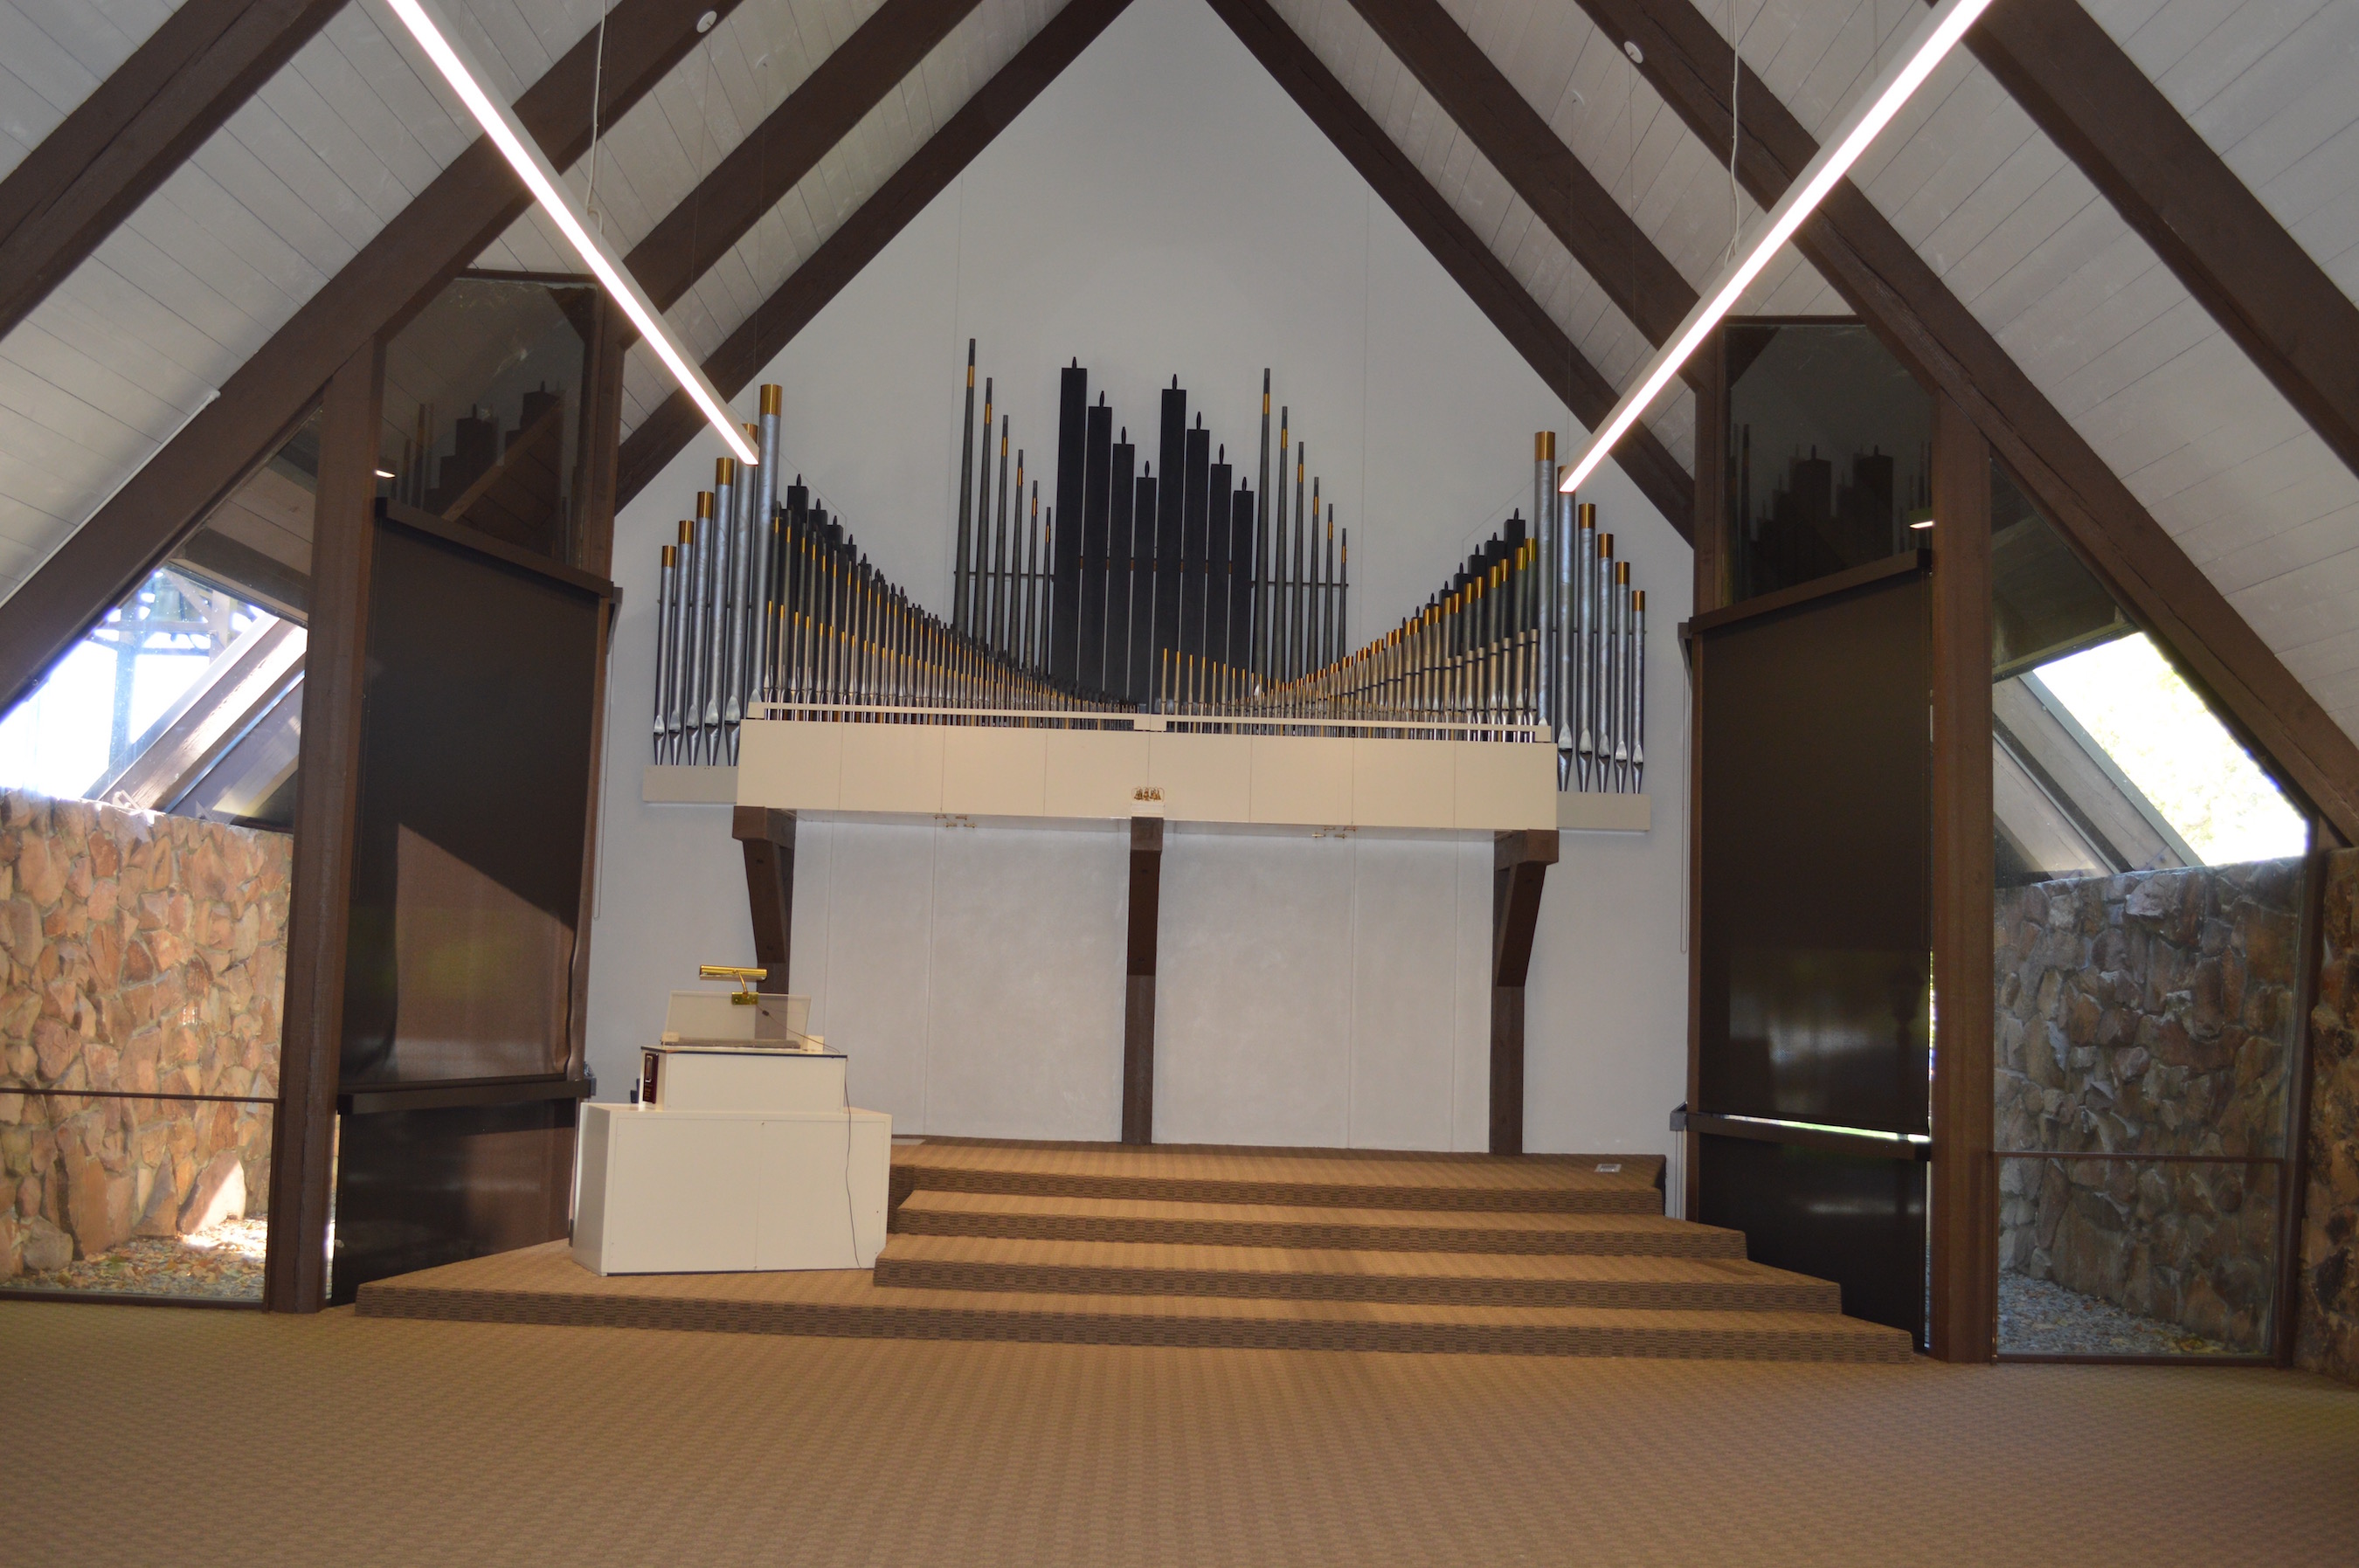 state-hospital-chapel-north-view-organ-2-copy